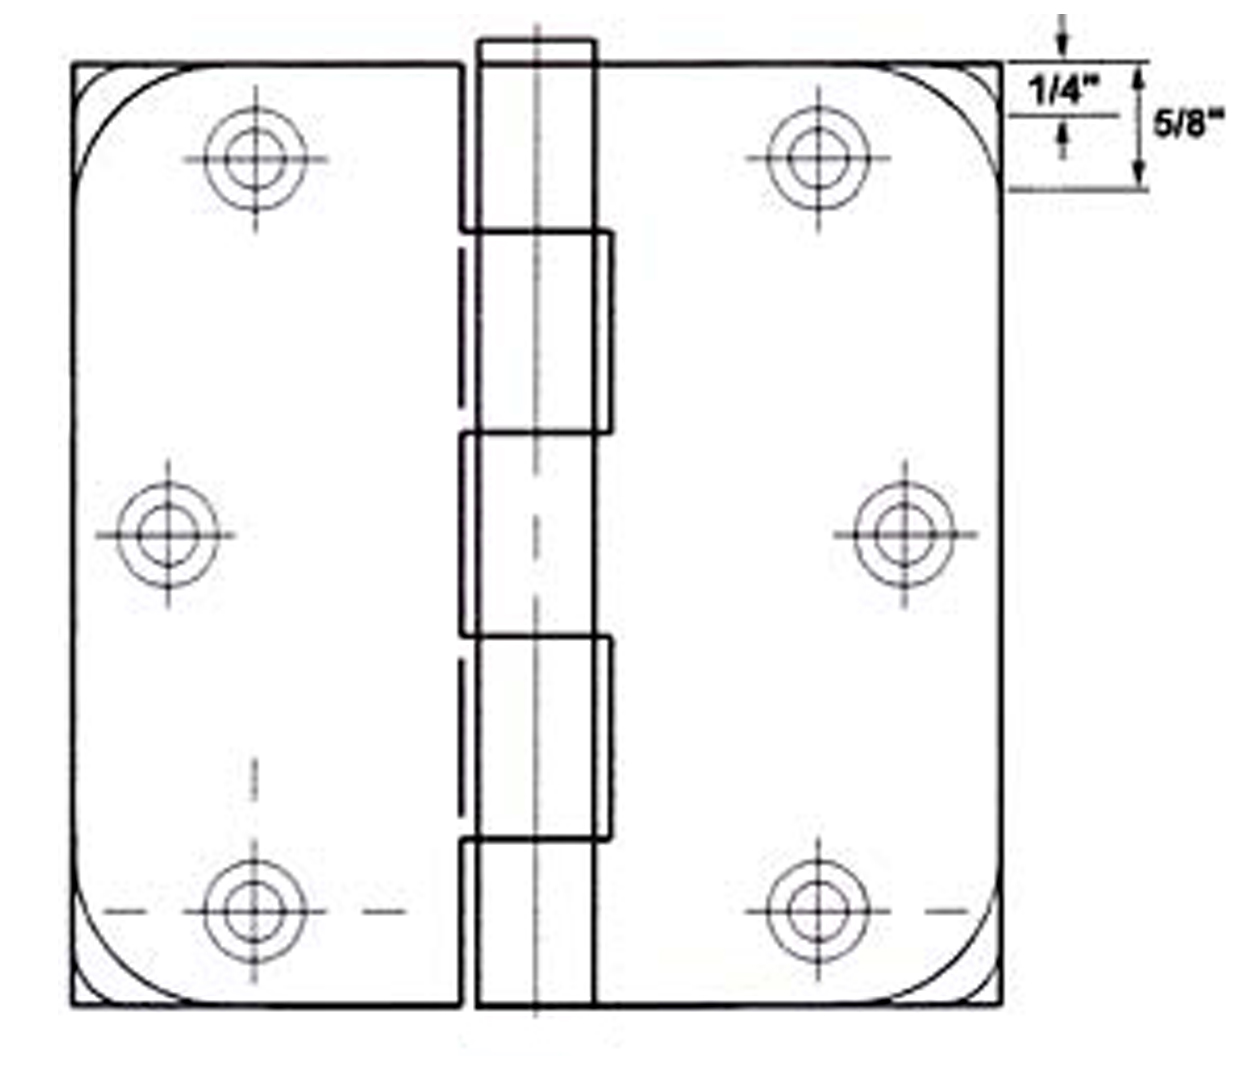 GlideRite 4 in. Steel Door Hinges with 1/4 in. Corner Radius, Matte Black finish, Pack of 12 - image 2 of 3